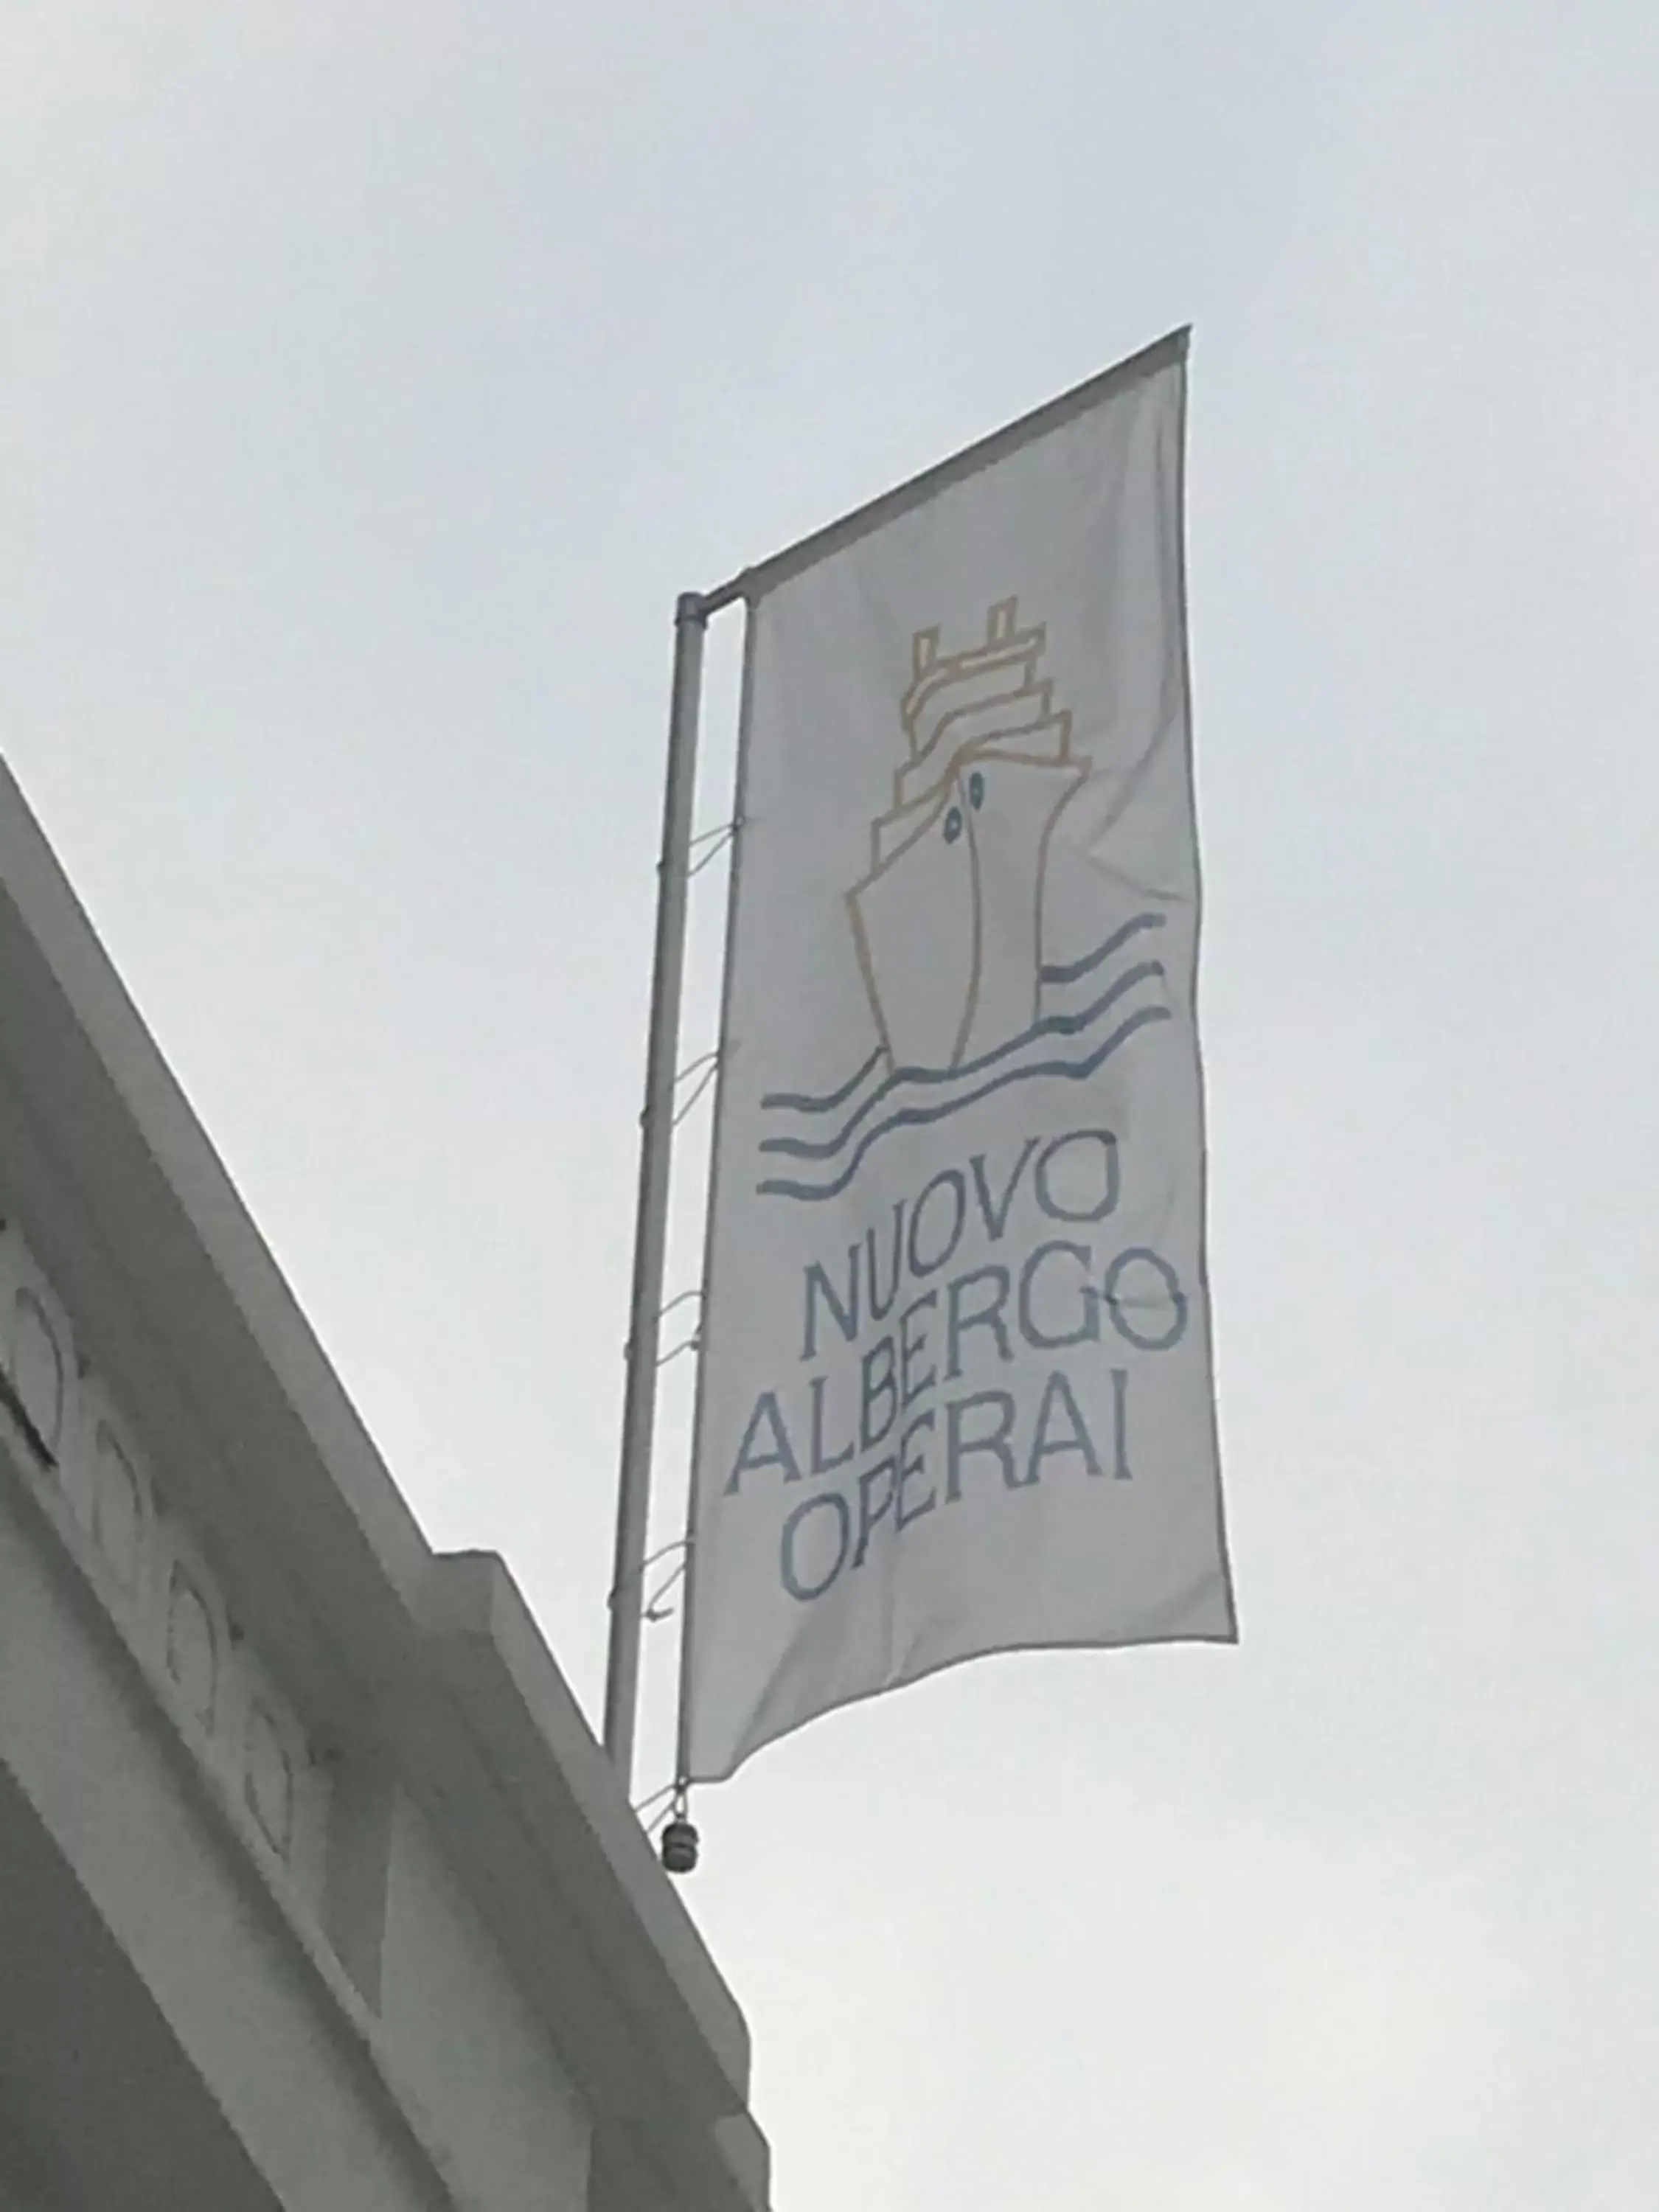 Property logo or sign, Property Logo/Sign in Nuovo Albergo Operai